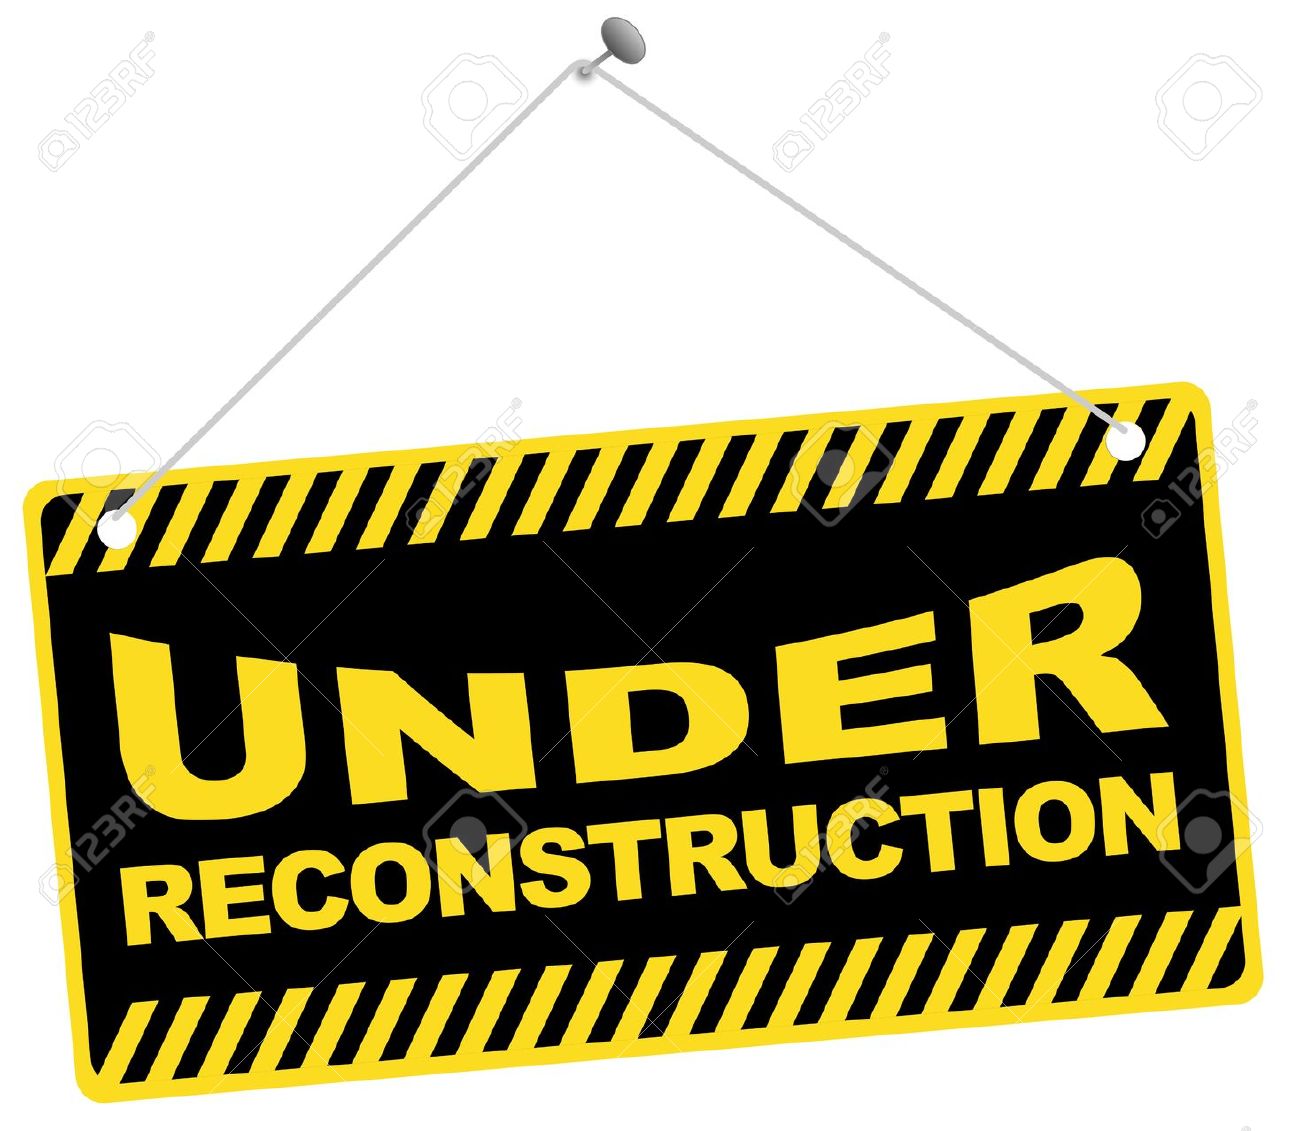 Under Reconstruction